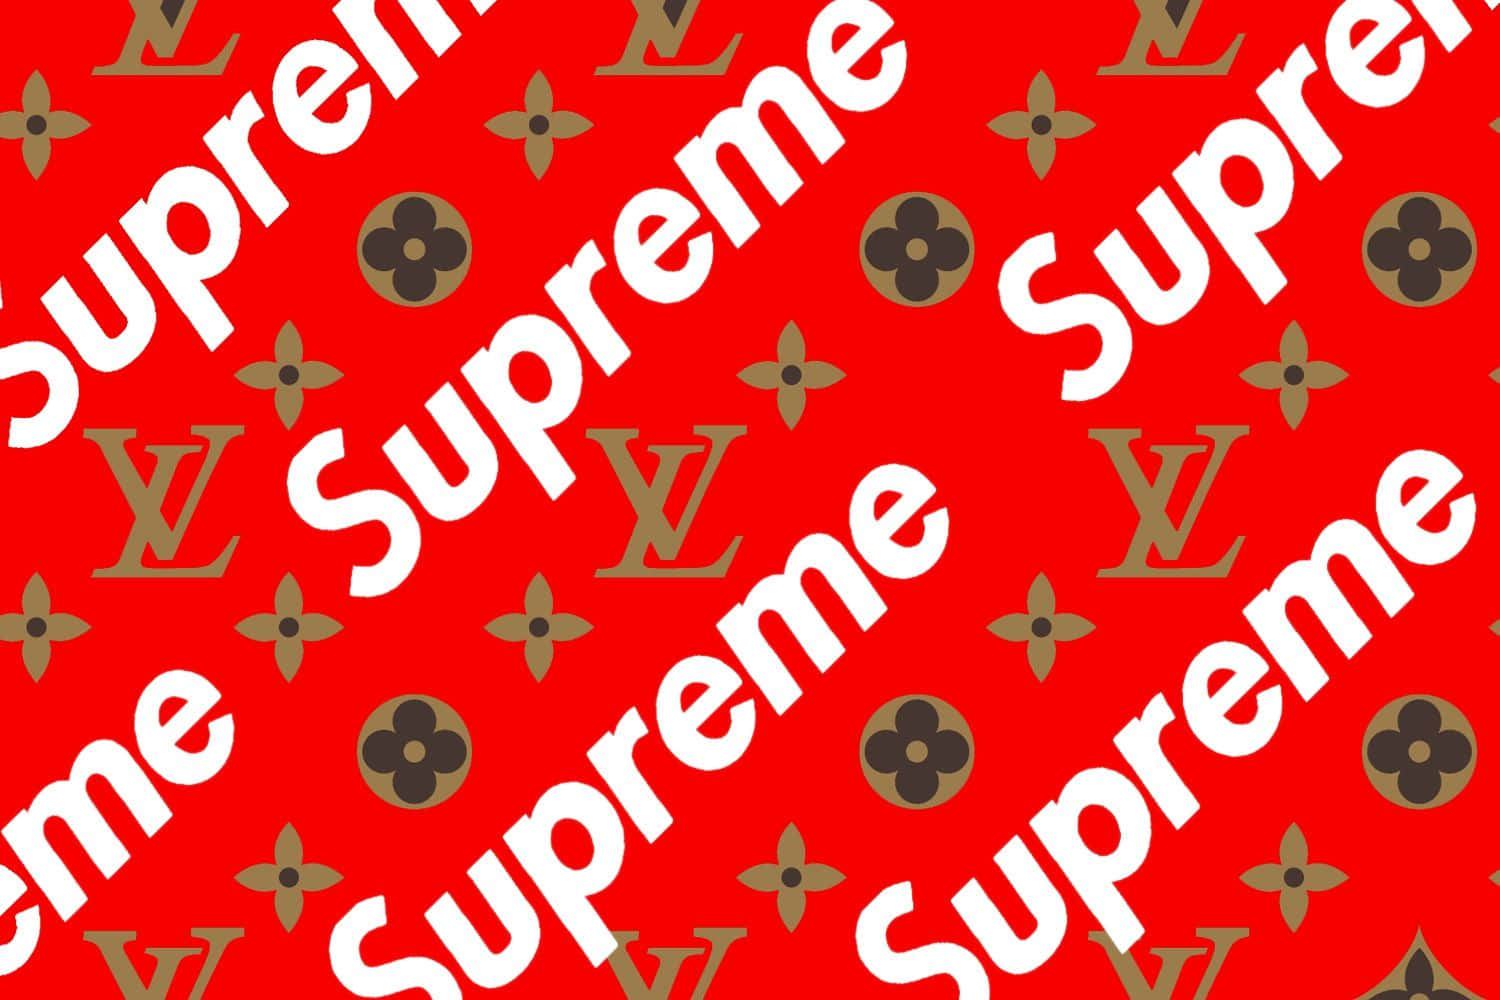 Download Red Supreme Logo Louis Vuitton Wallpaper